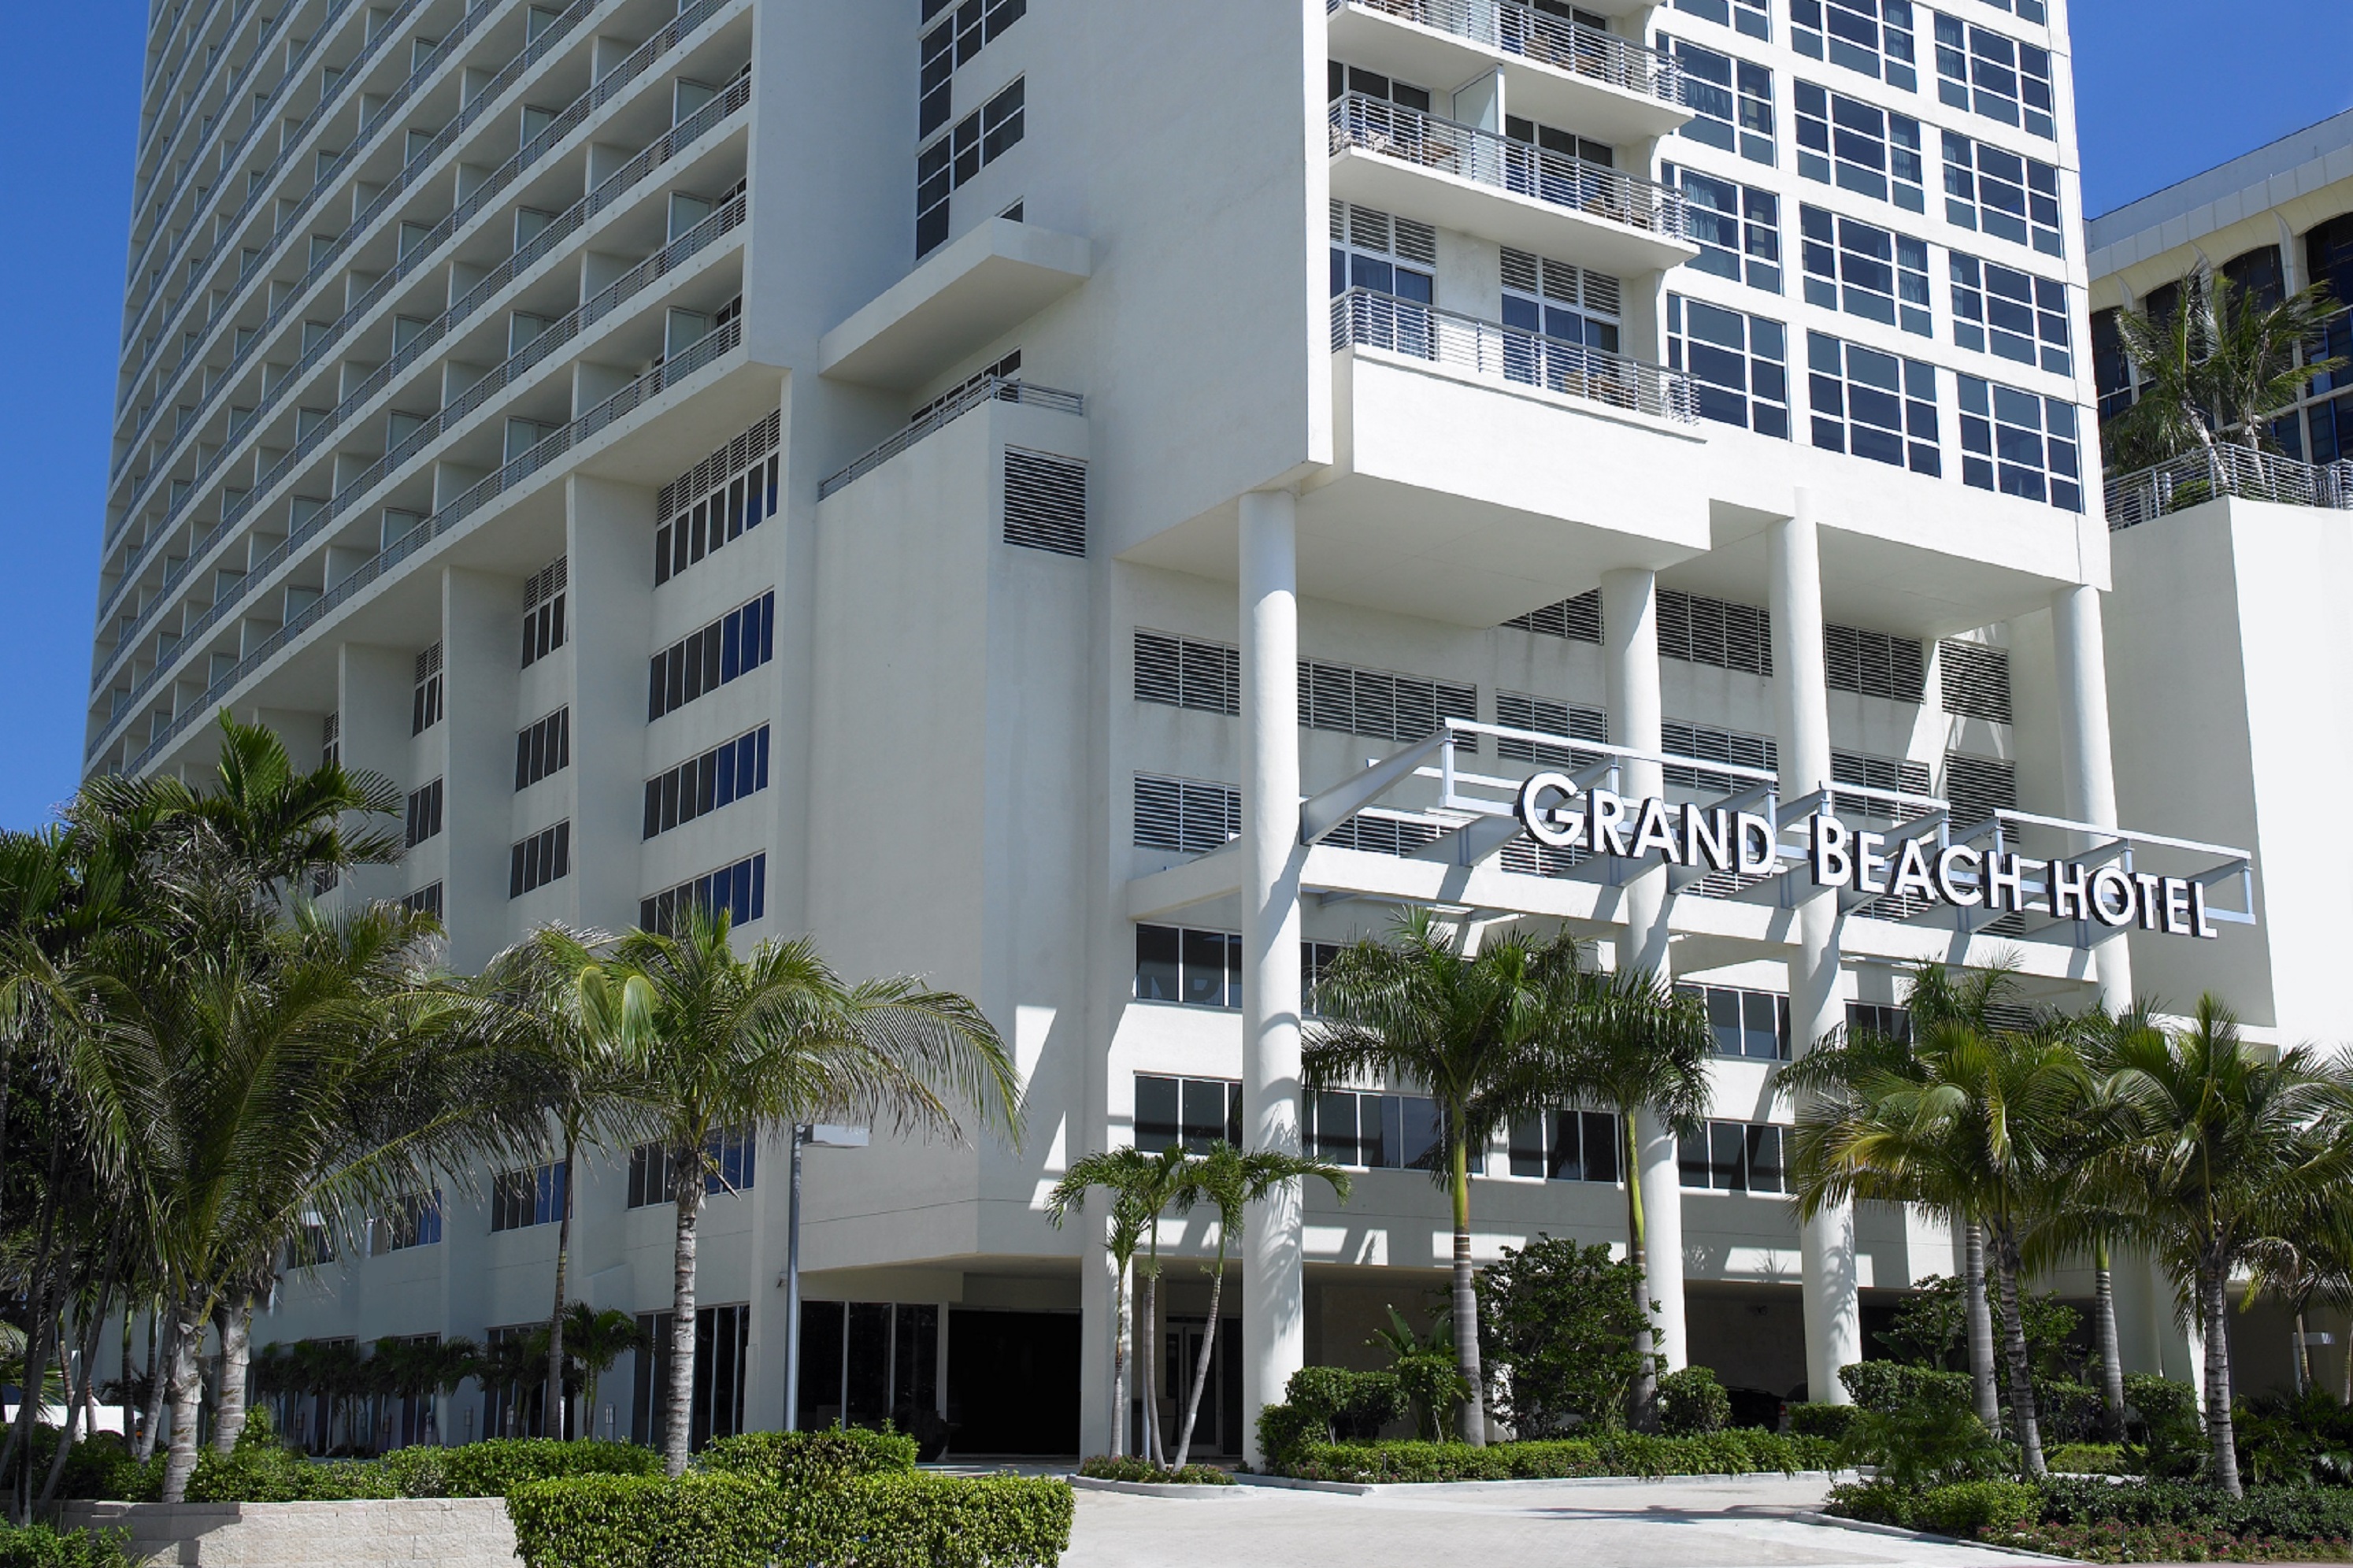 Grand Beach Hotel image